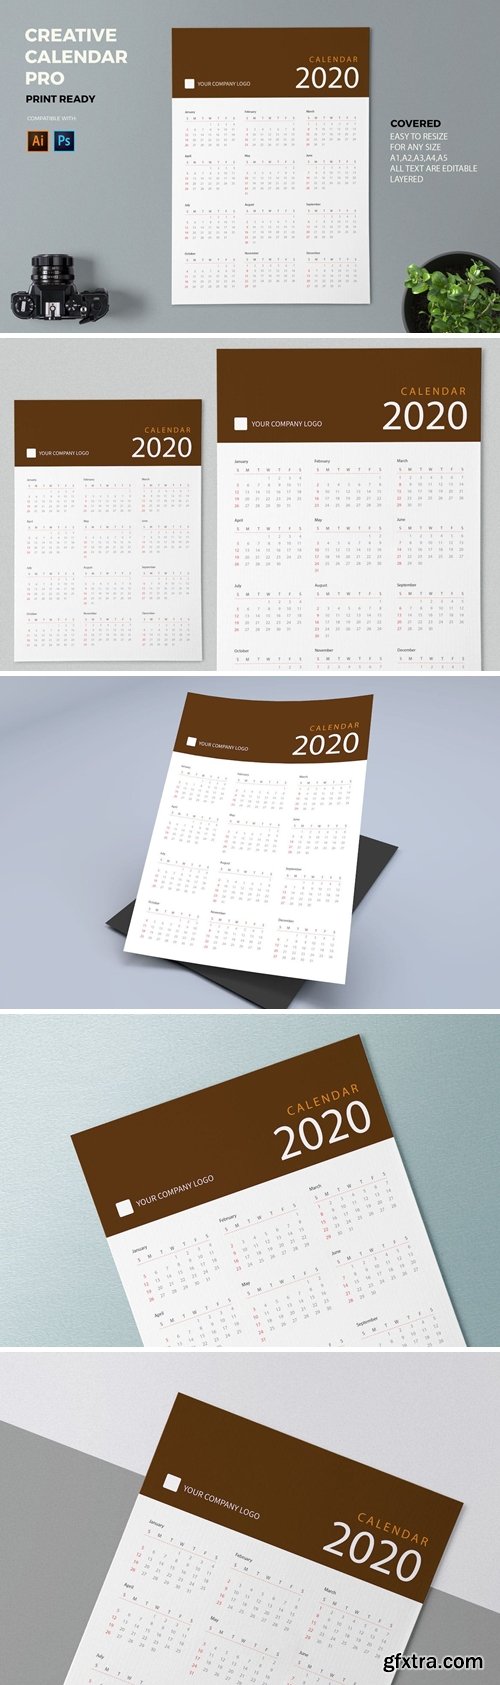 Creative Calendar Pro 2020